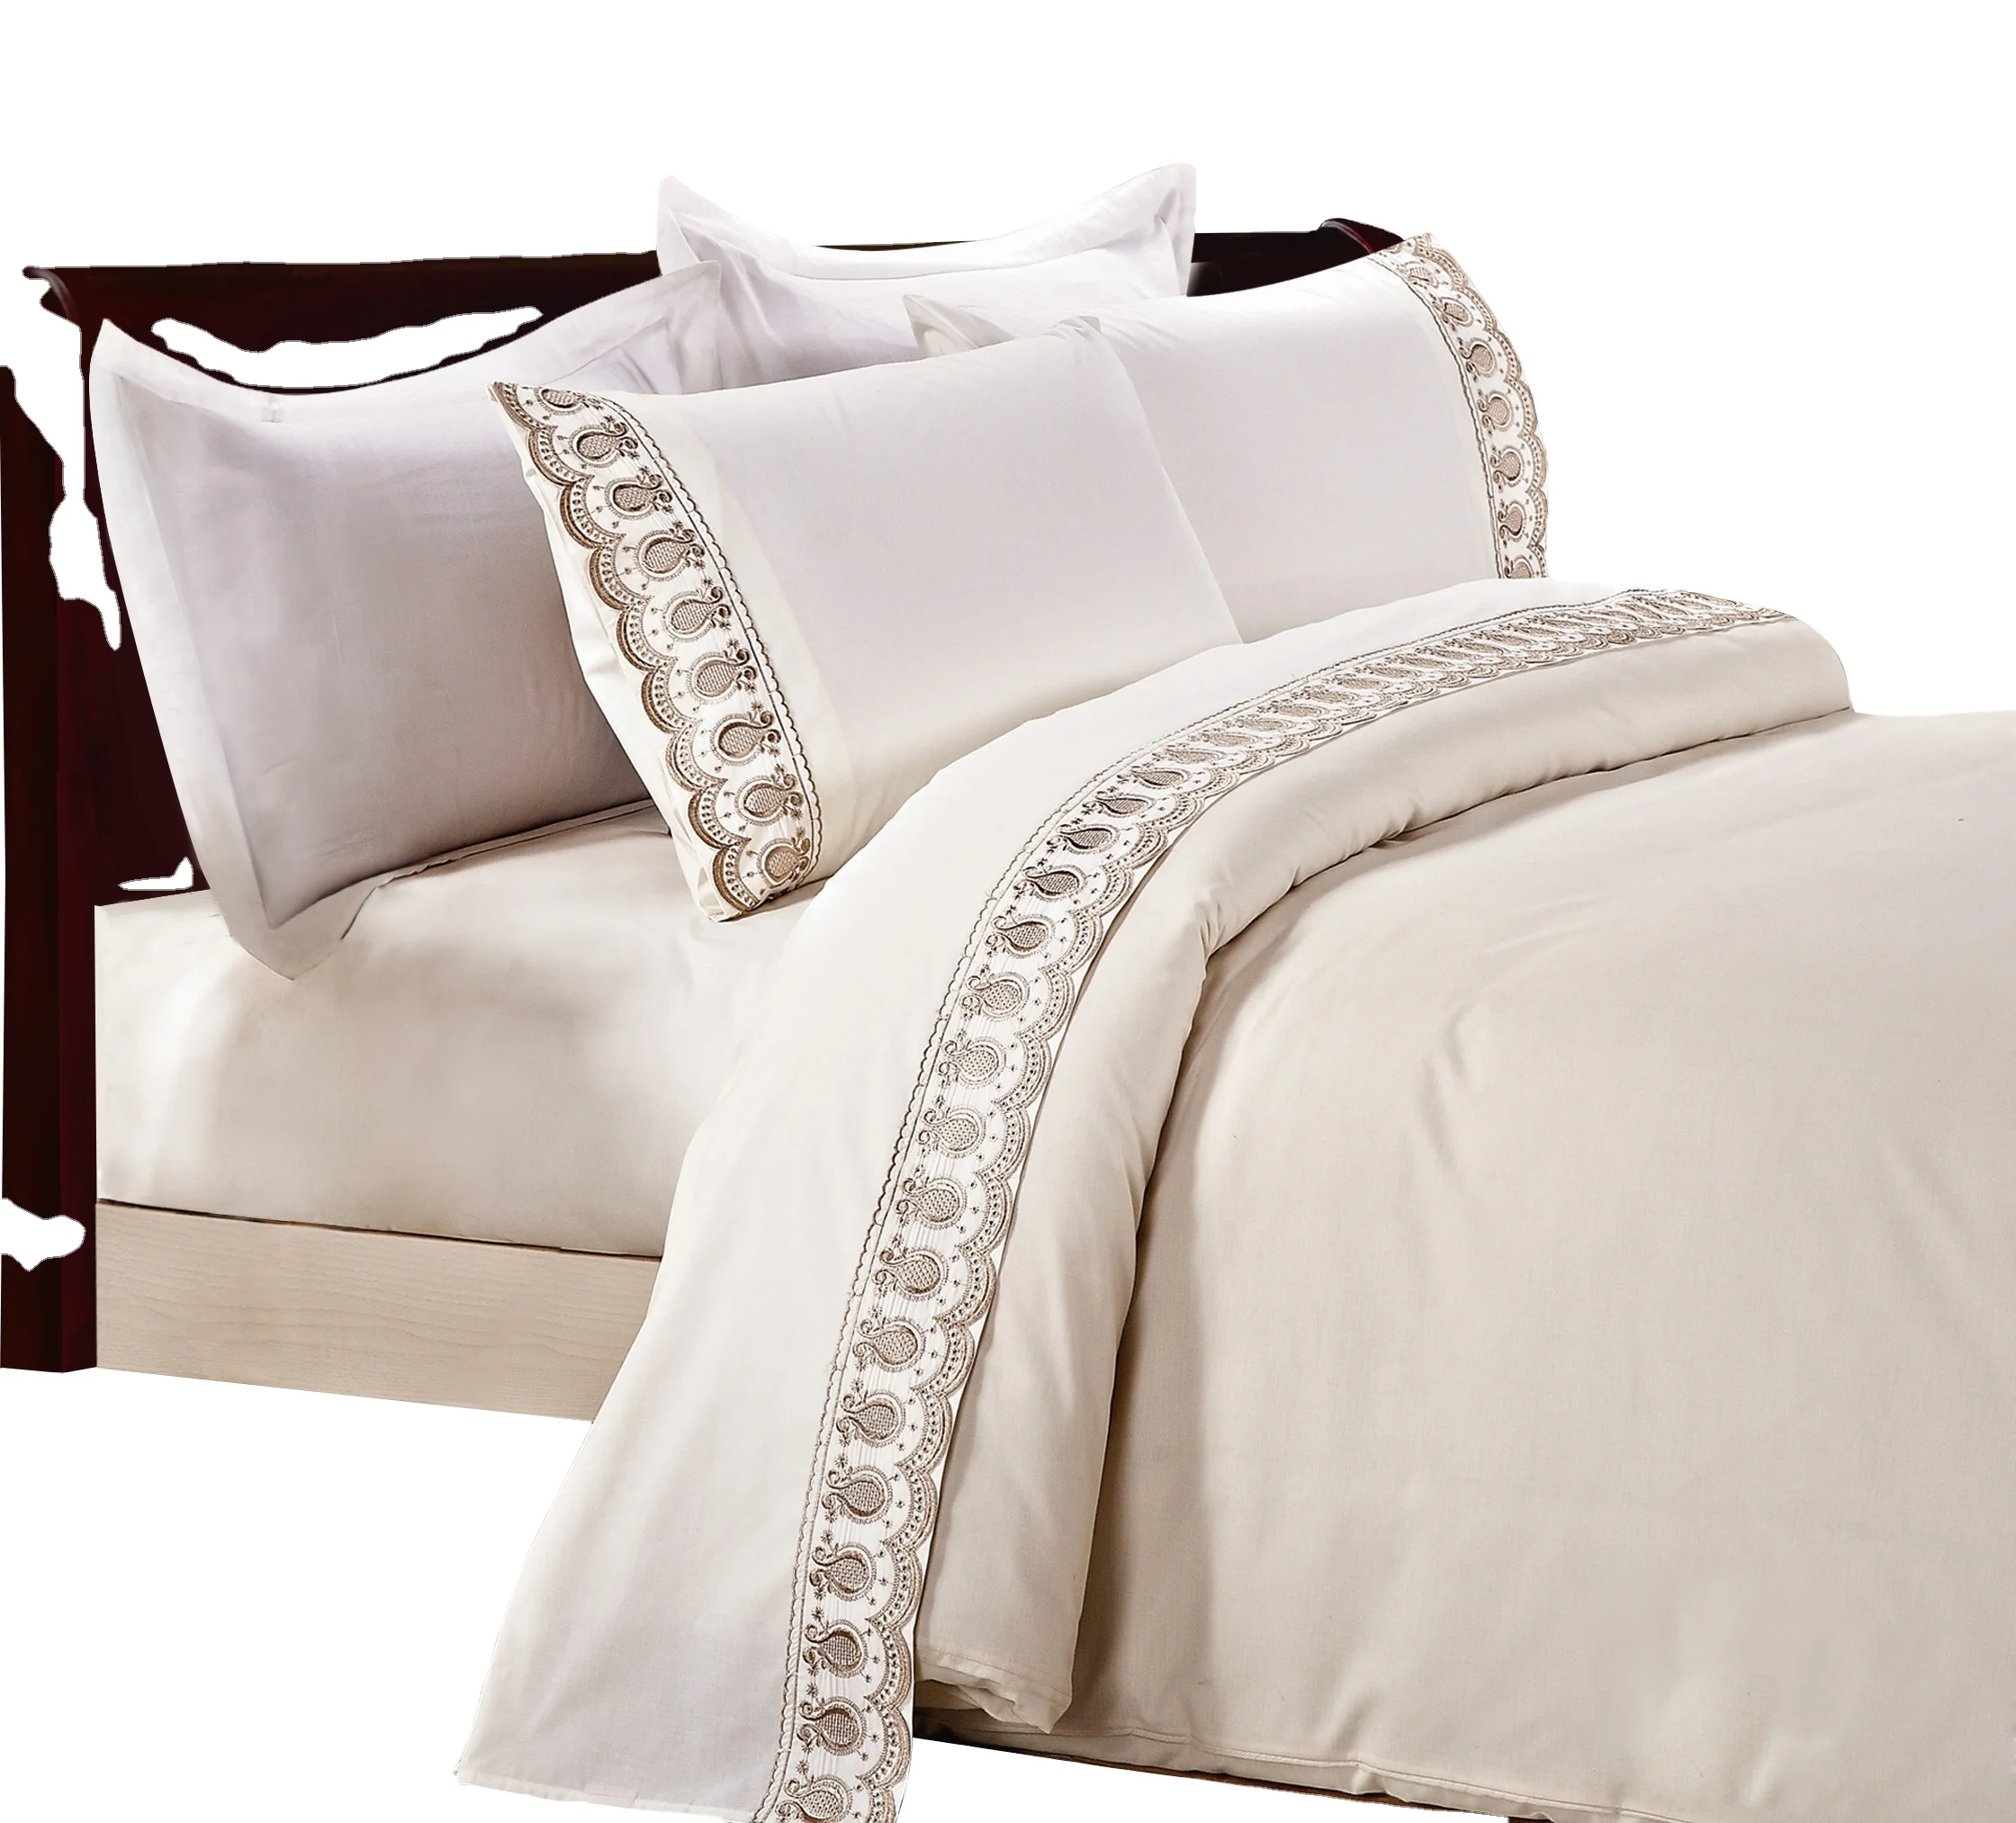 Brushed Microfiber Hotel Luxury bedding set Soft Premium Deep Pockets Bed Sheets Set wholesale